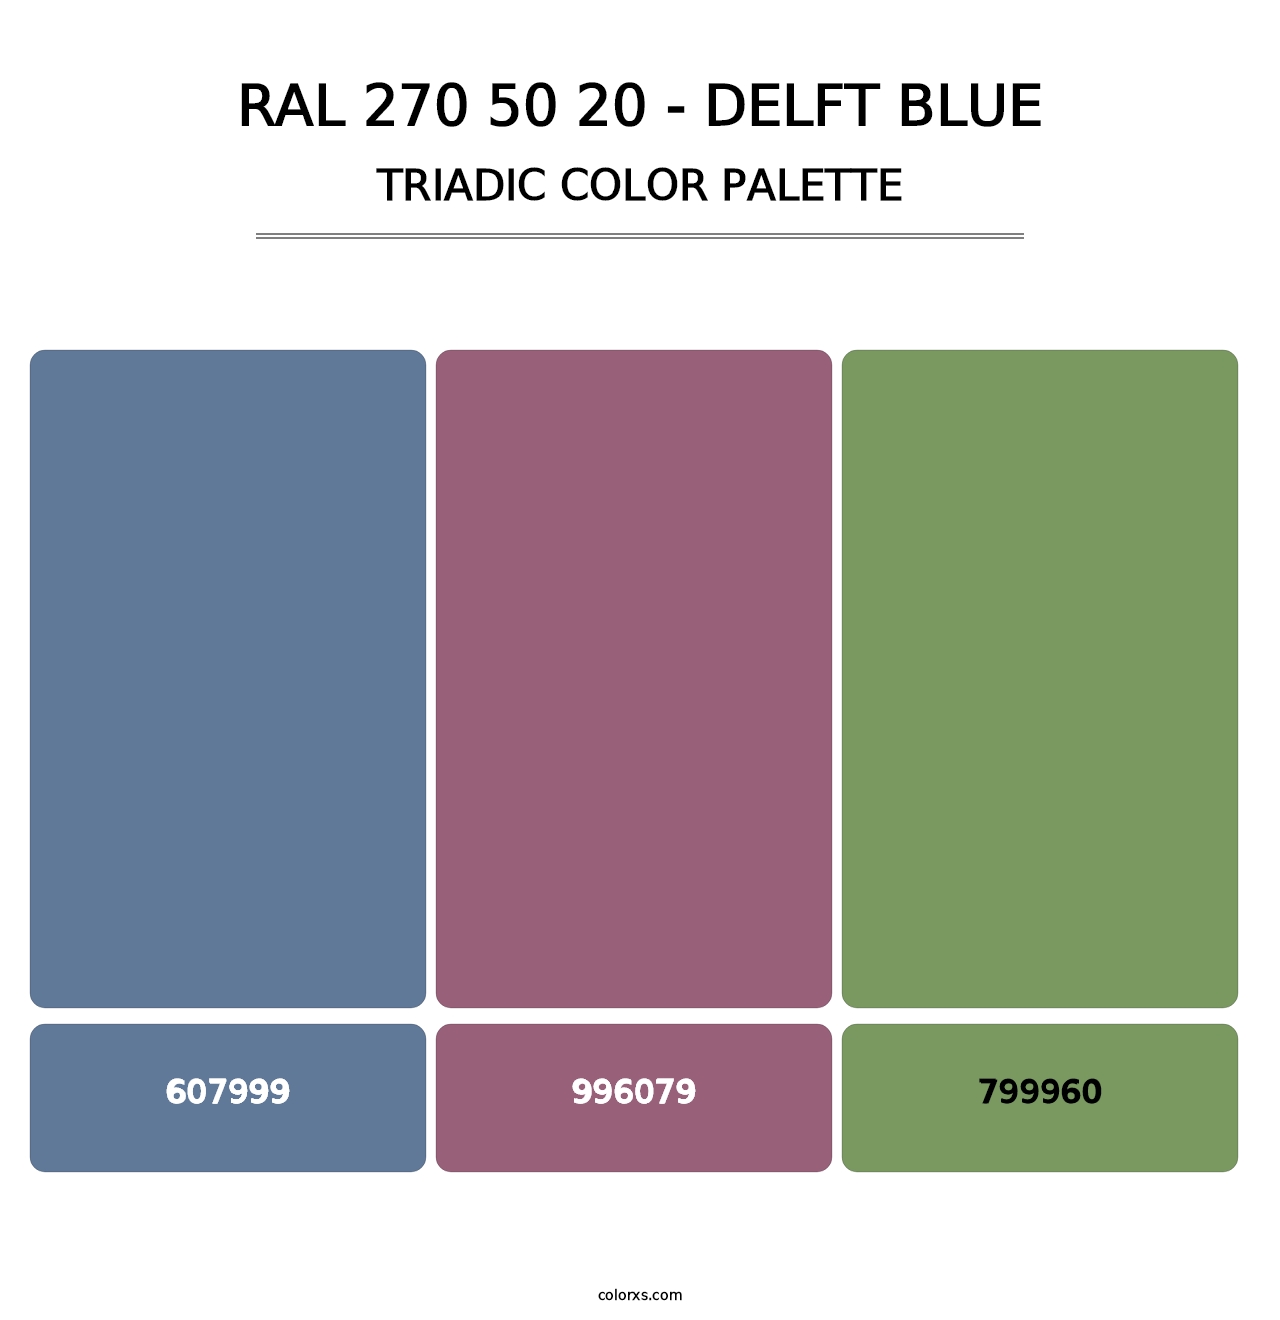 RAL 270 50 20 - Delft Blue - Triadic Color Palette